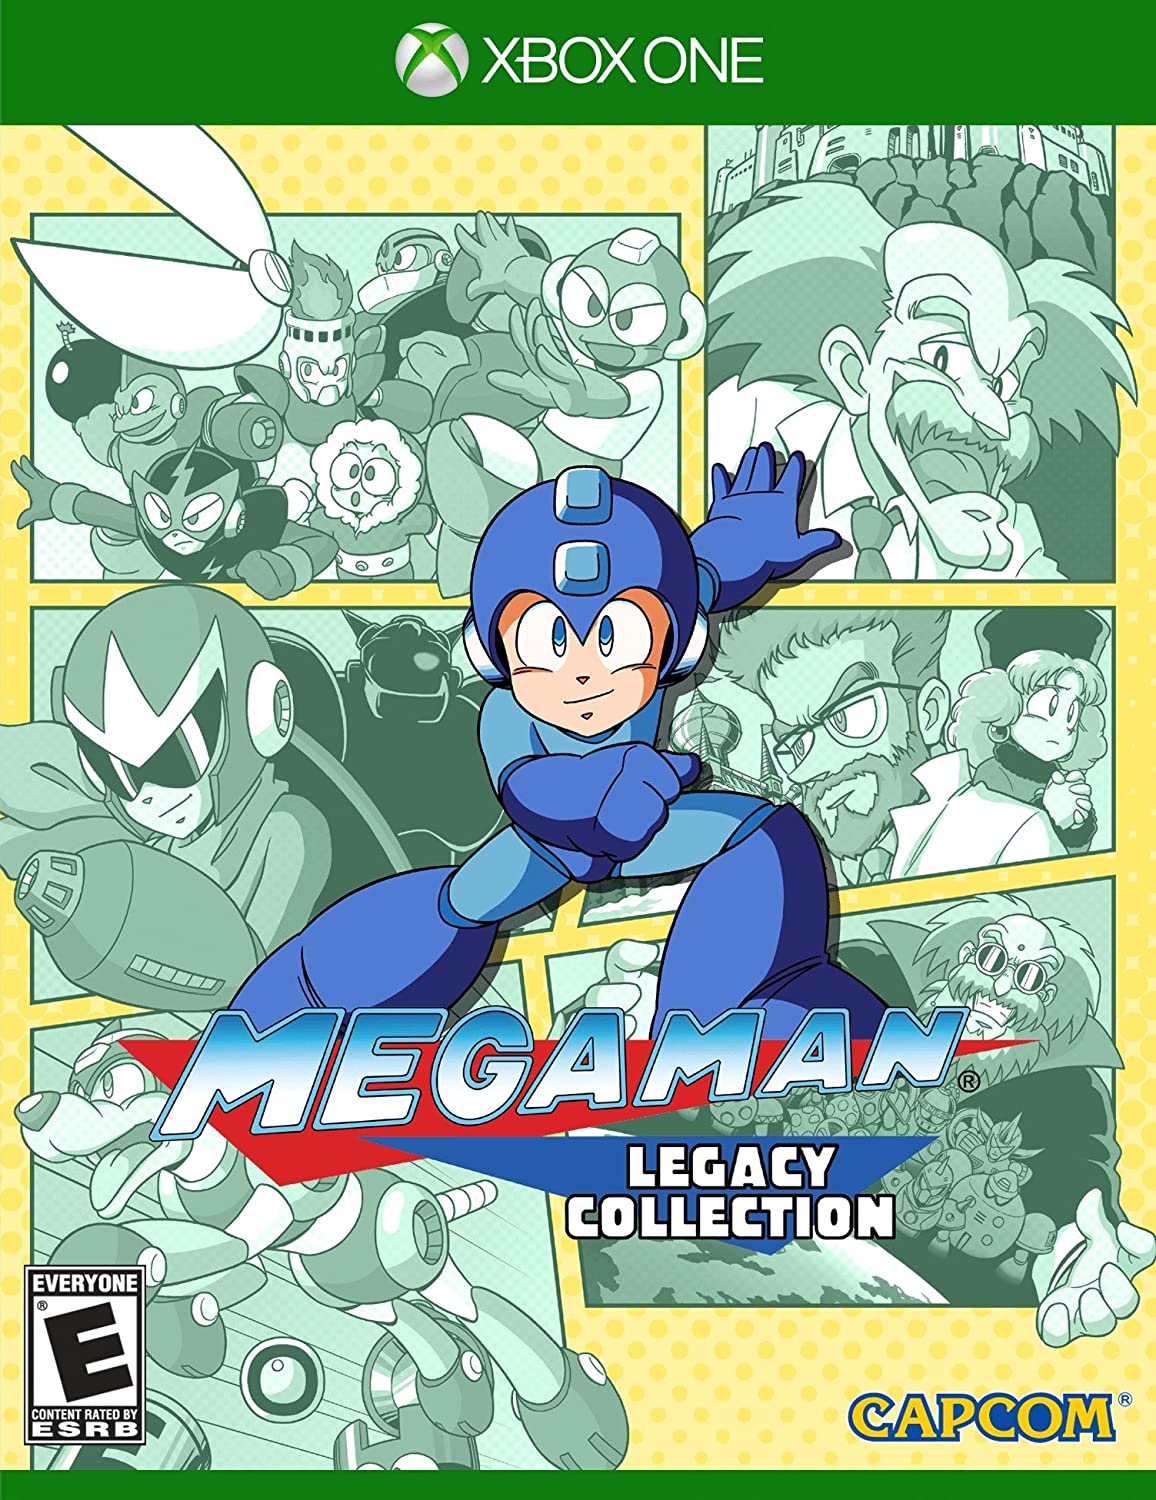 Mega Man Legacy Collection (USA Import) (Xbox One), Capcom